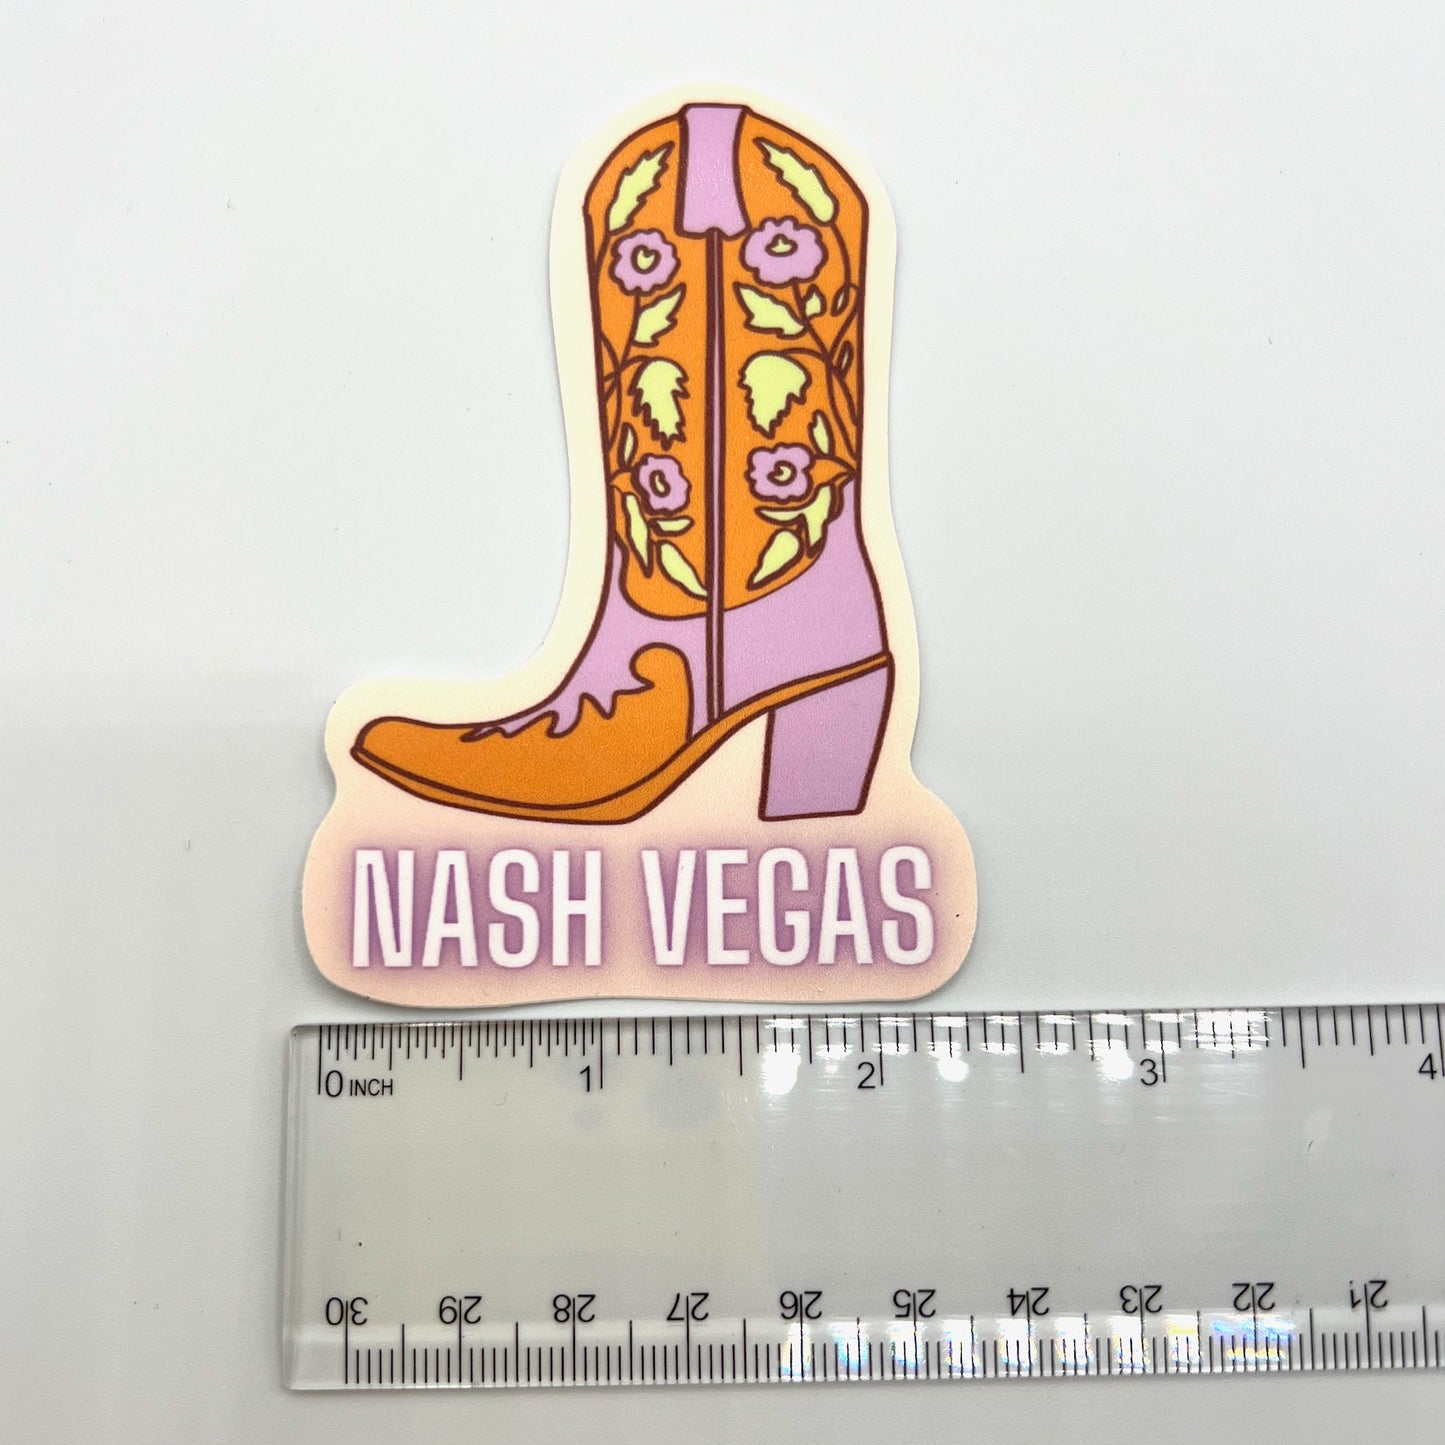 ruler showing Nash Vegas sticker is 2.25" wide